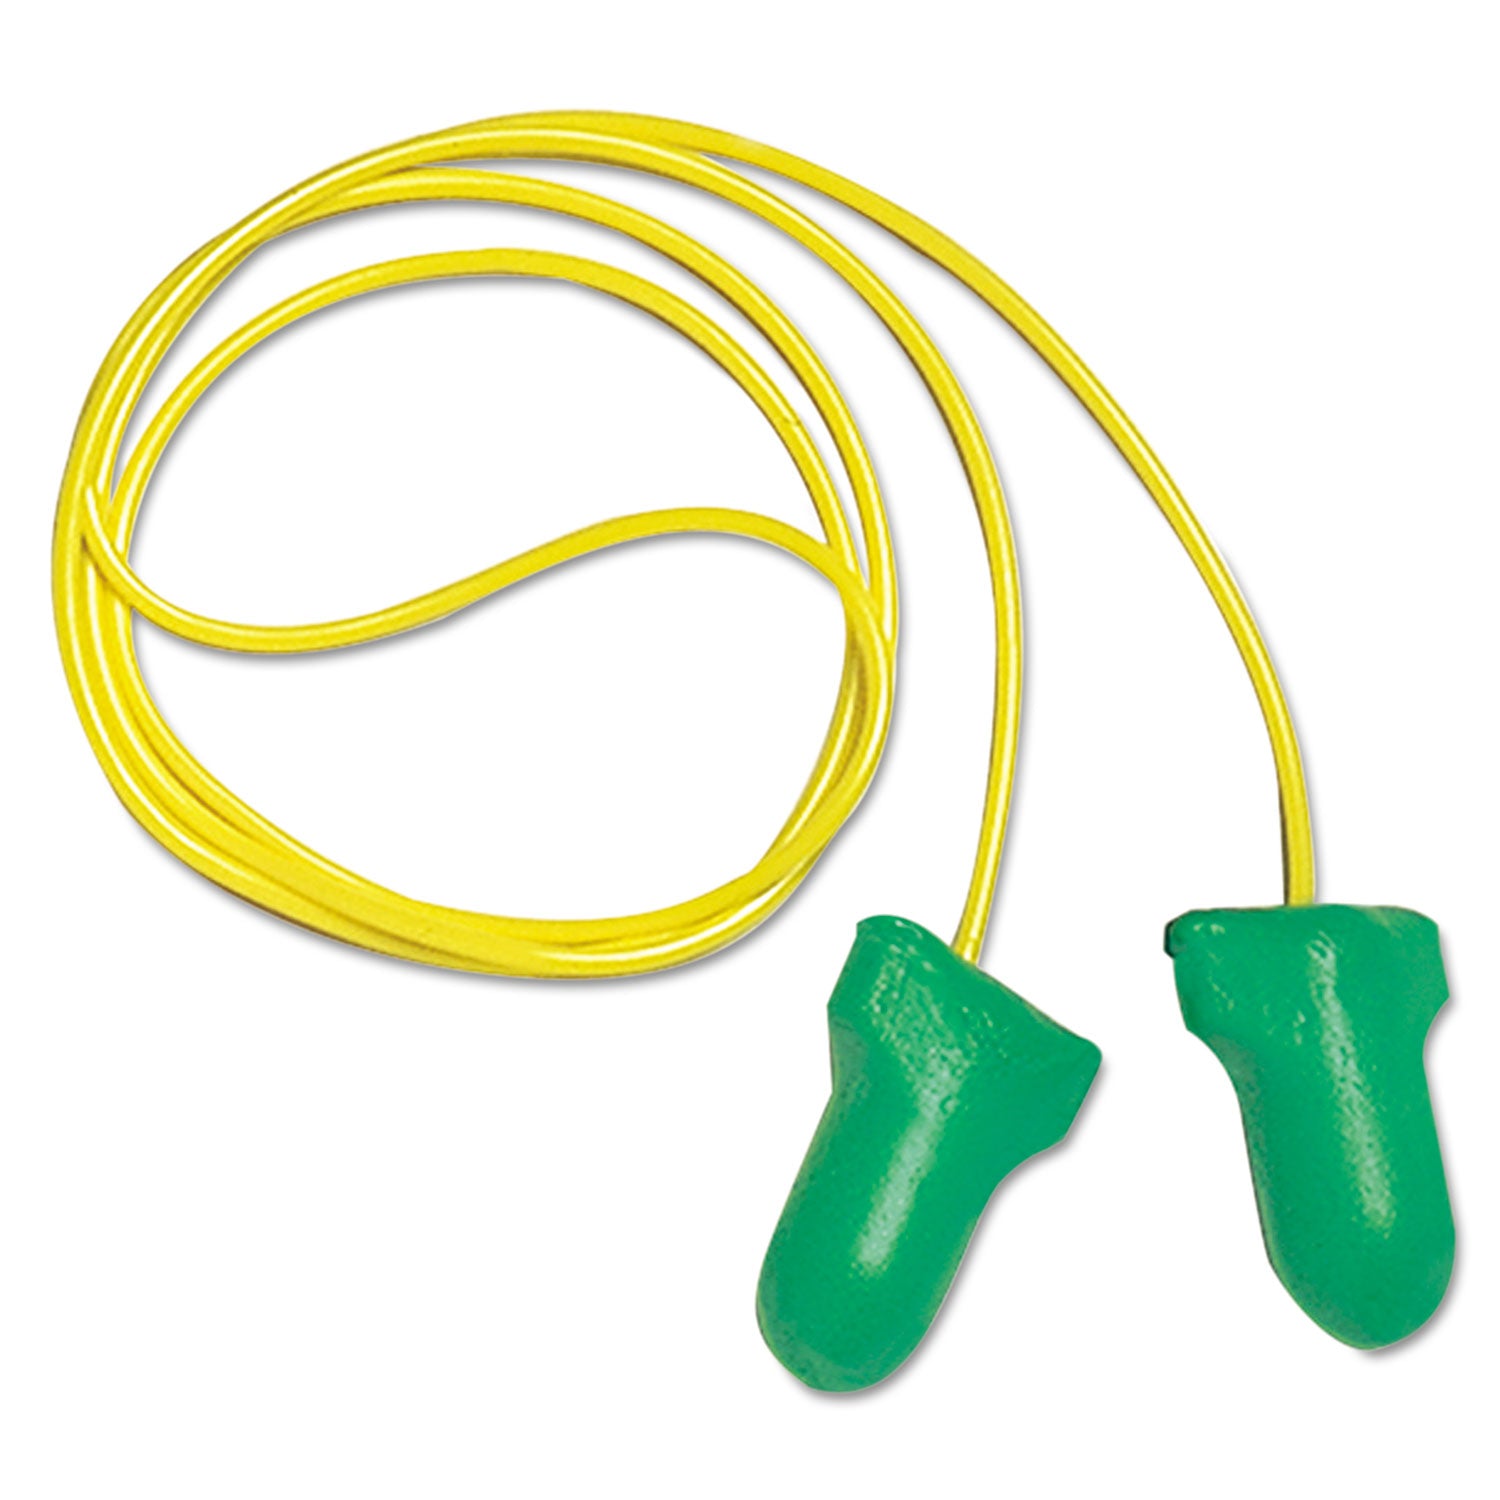 MAXIMUM Lite Single-Use Earplugs, Corded, 30NRR, Green, 100 Pairs - 